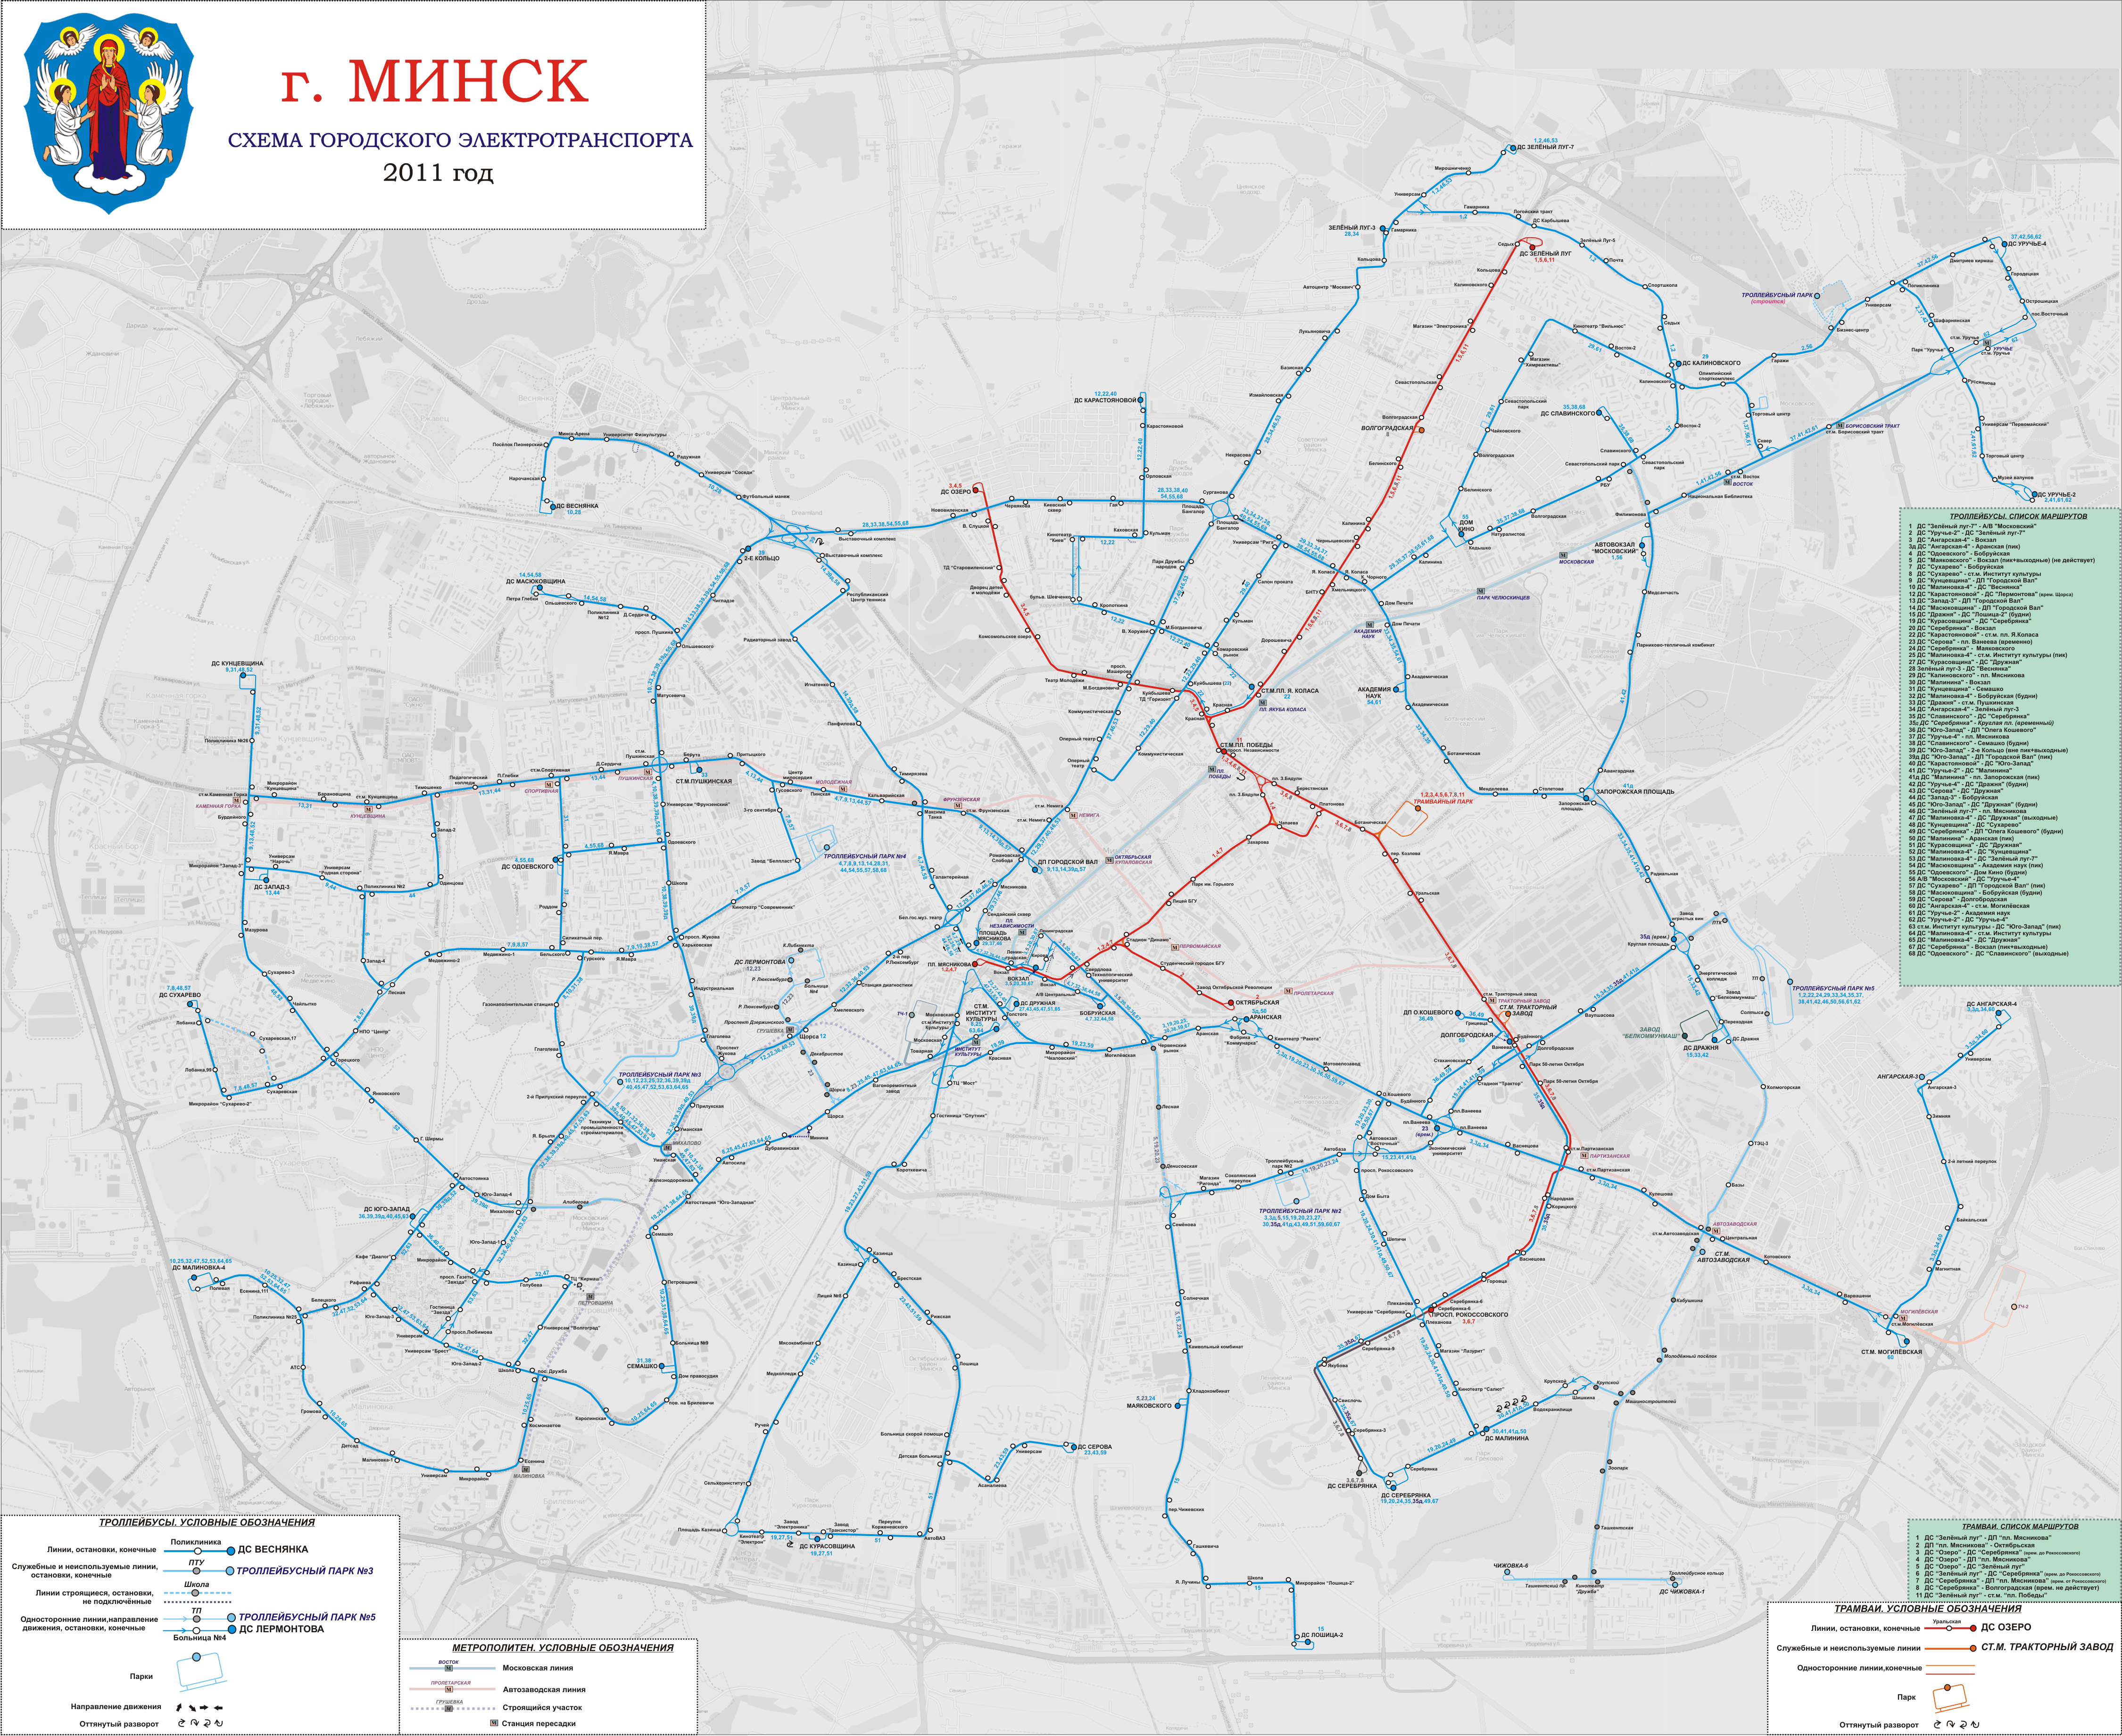 Minskas — Maps